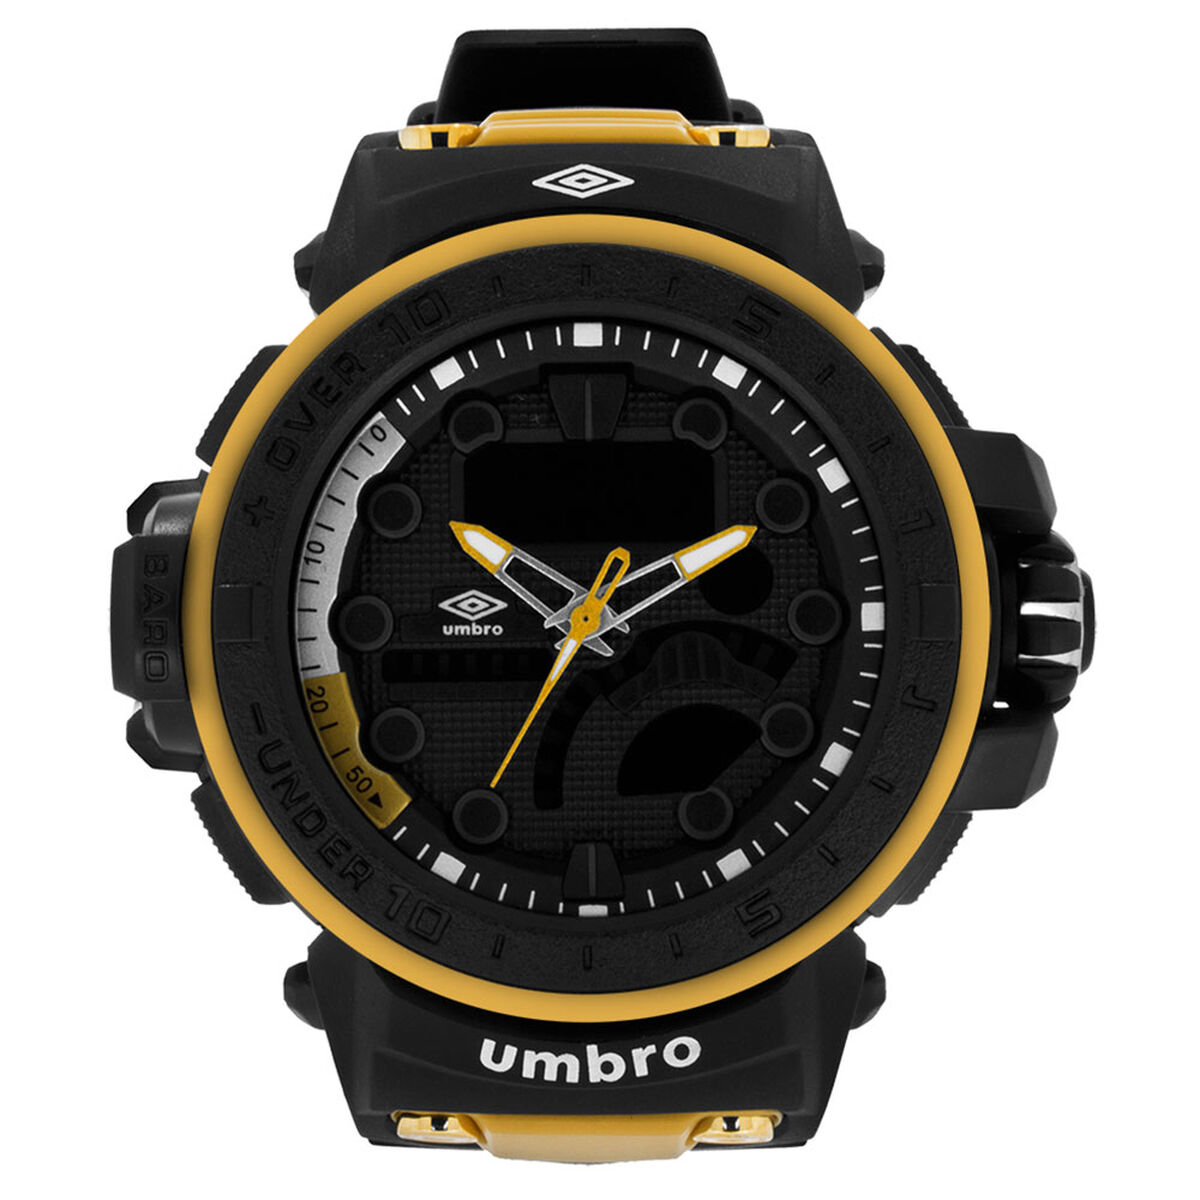 Reloj Digital UMBRO Modelo UMB-081-1